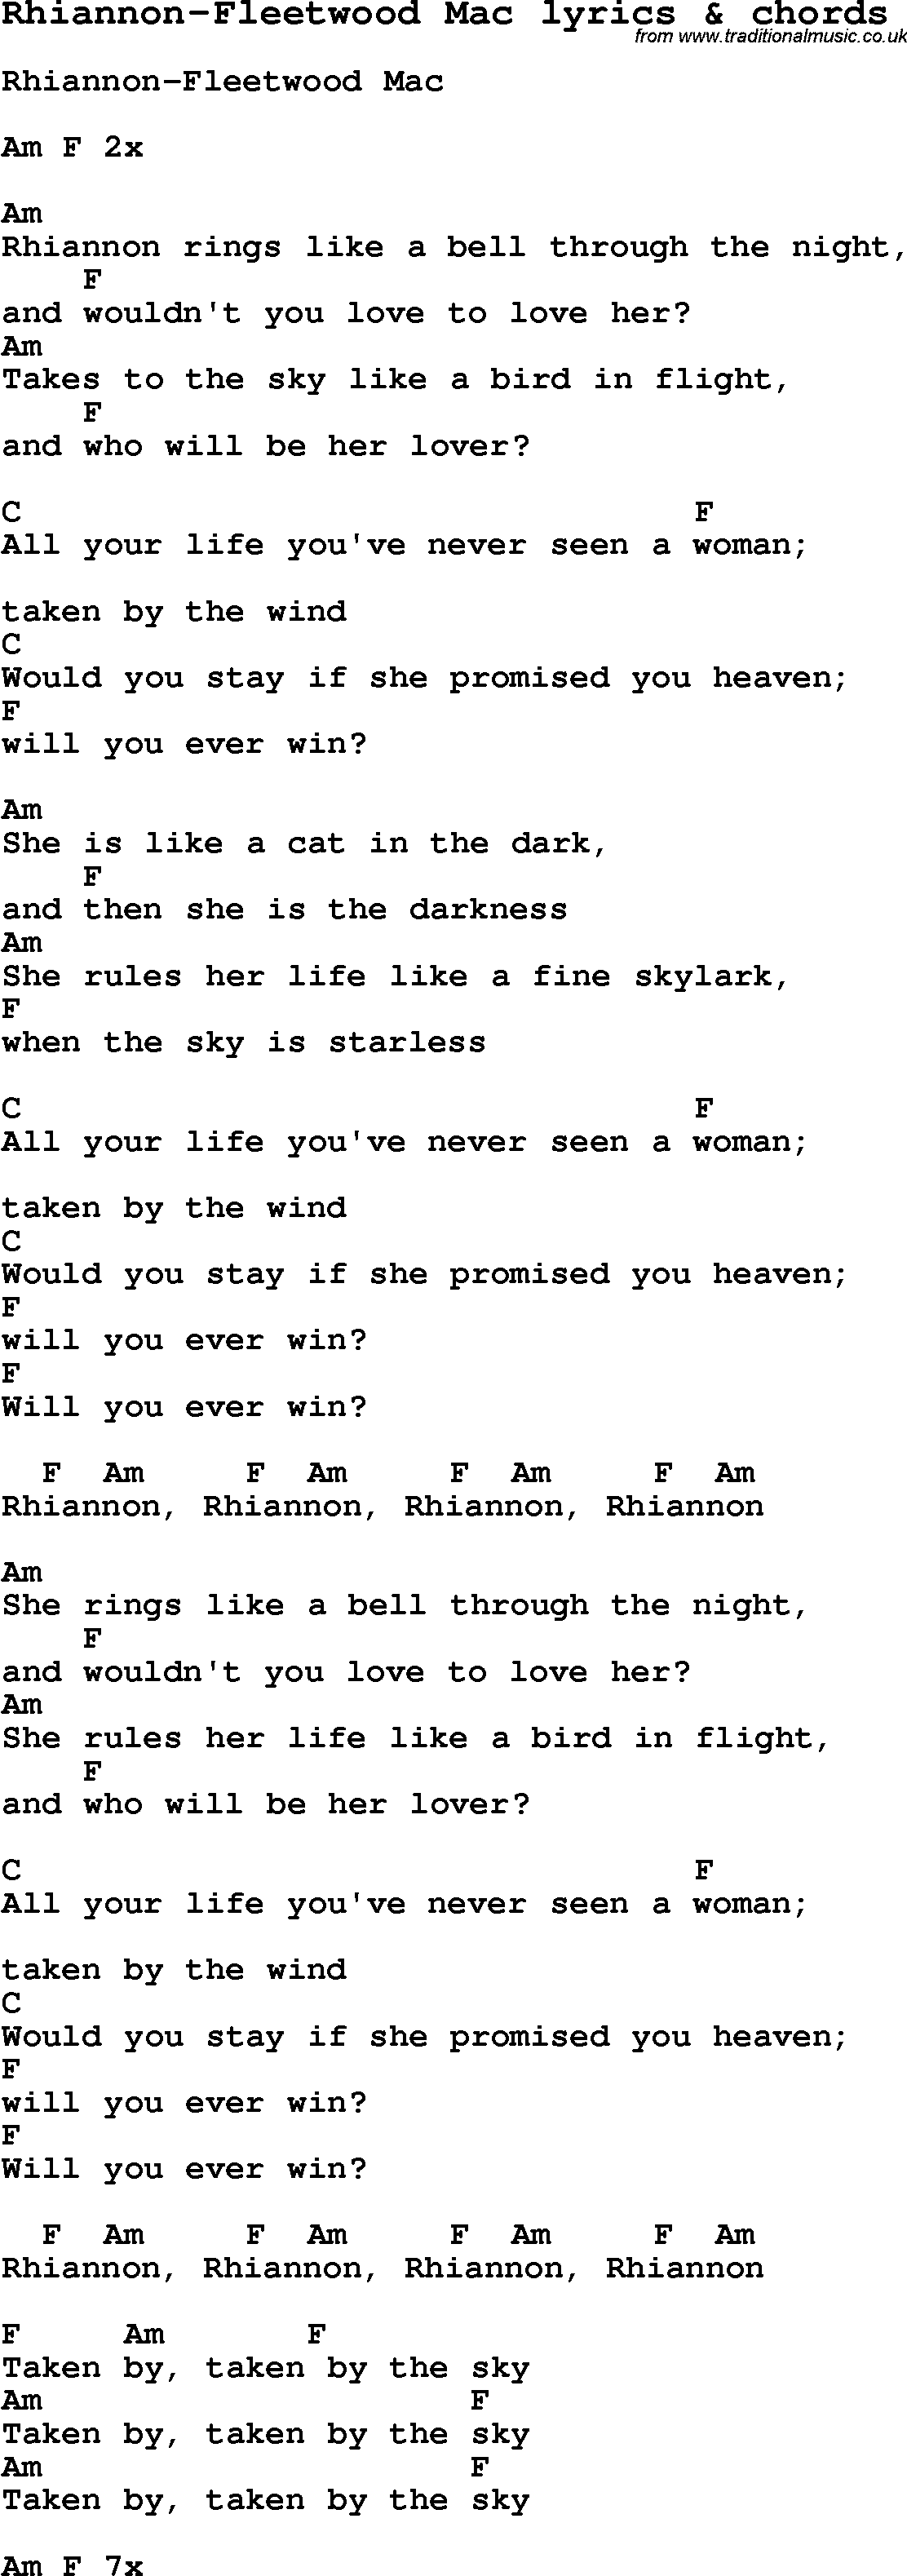 Love Song Lyrics for: Rhiannon-Fleetwood Mac with chords for Ukulele, Guitar Banjo etc.